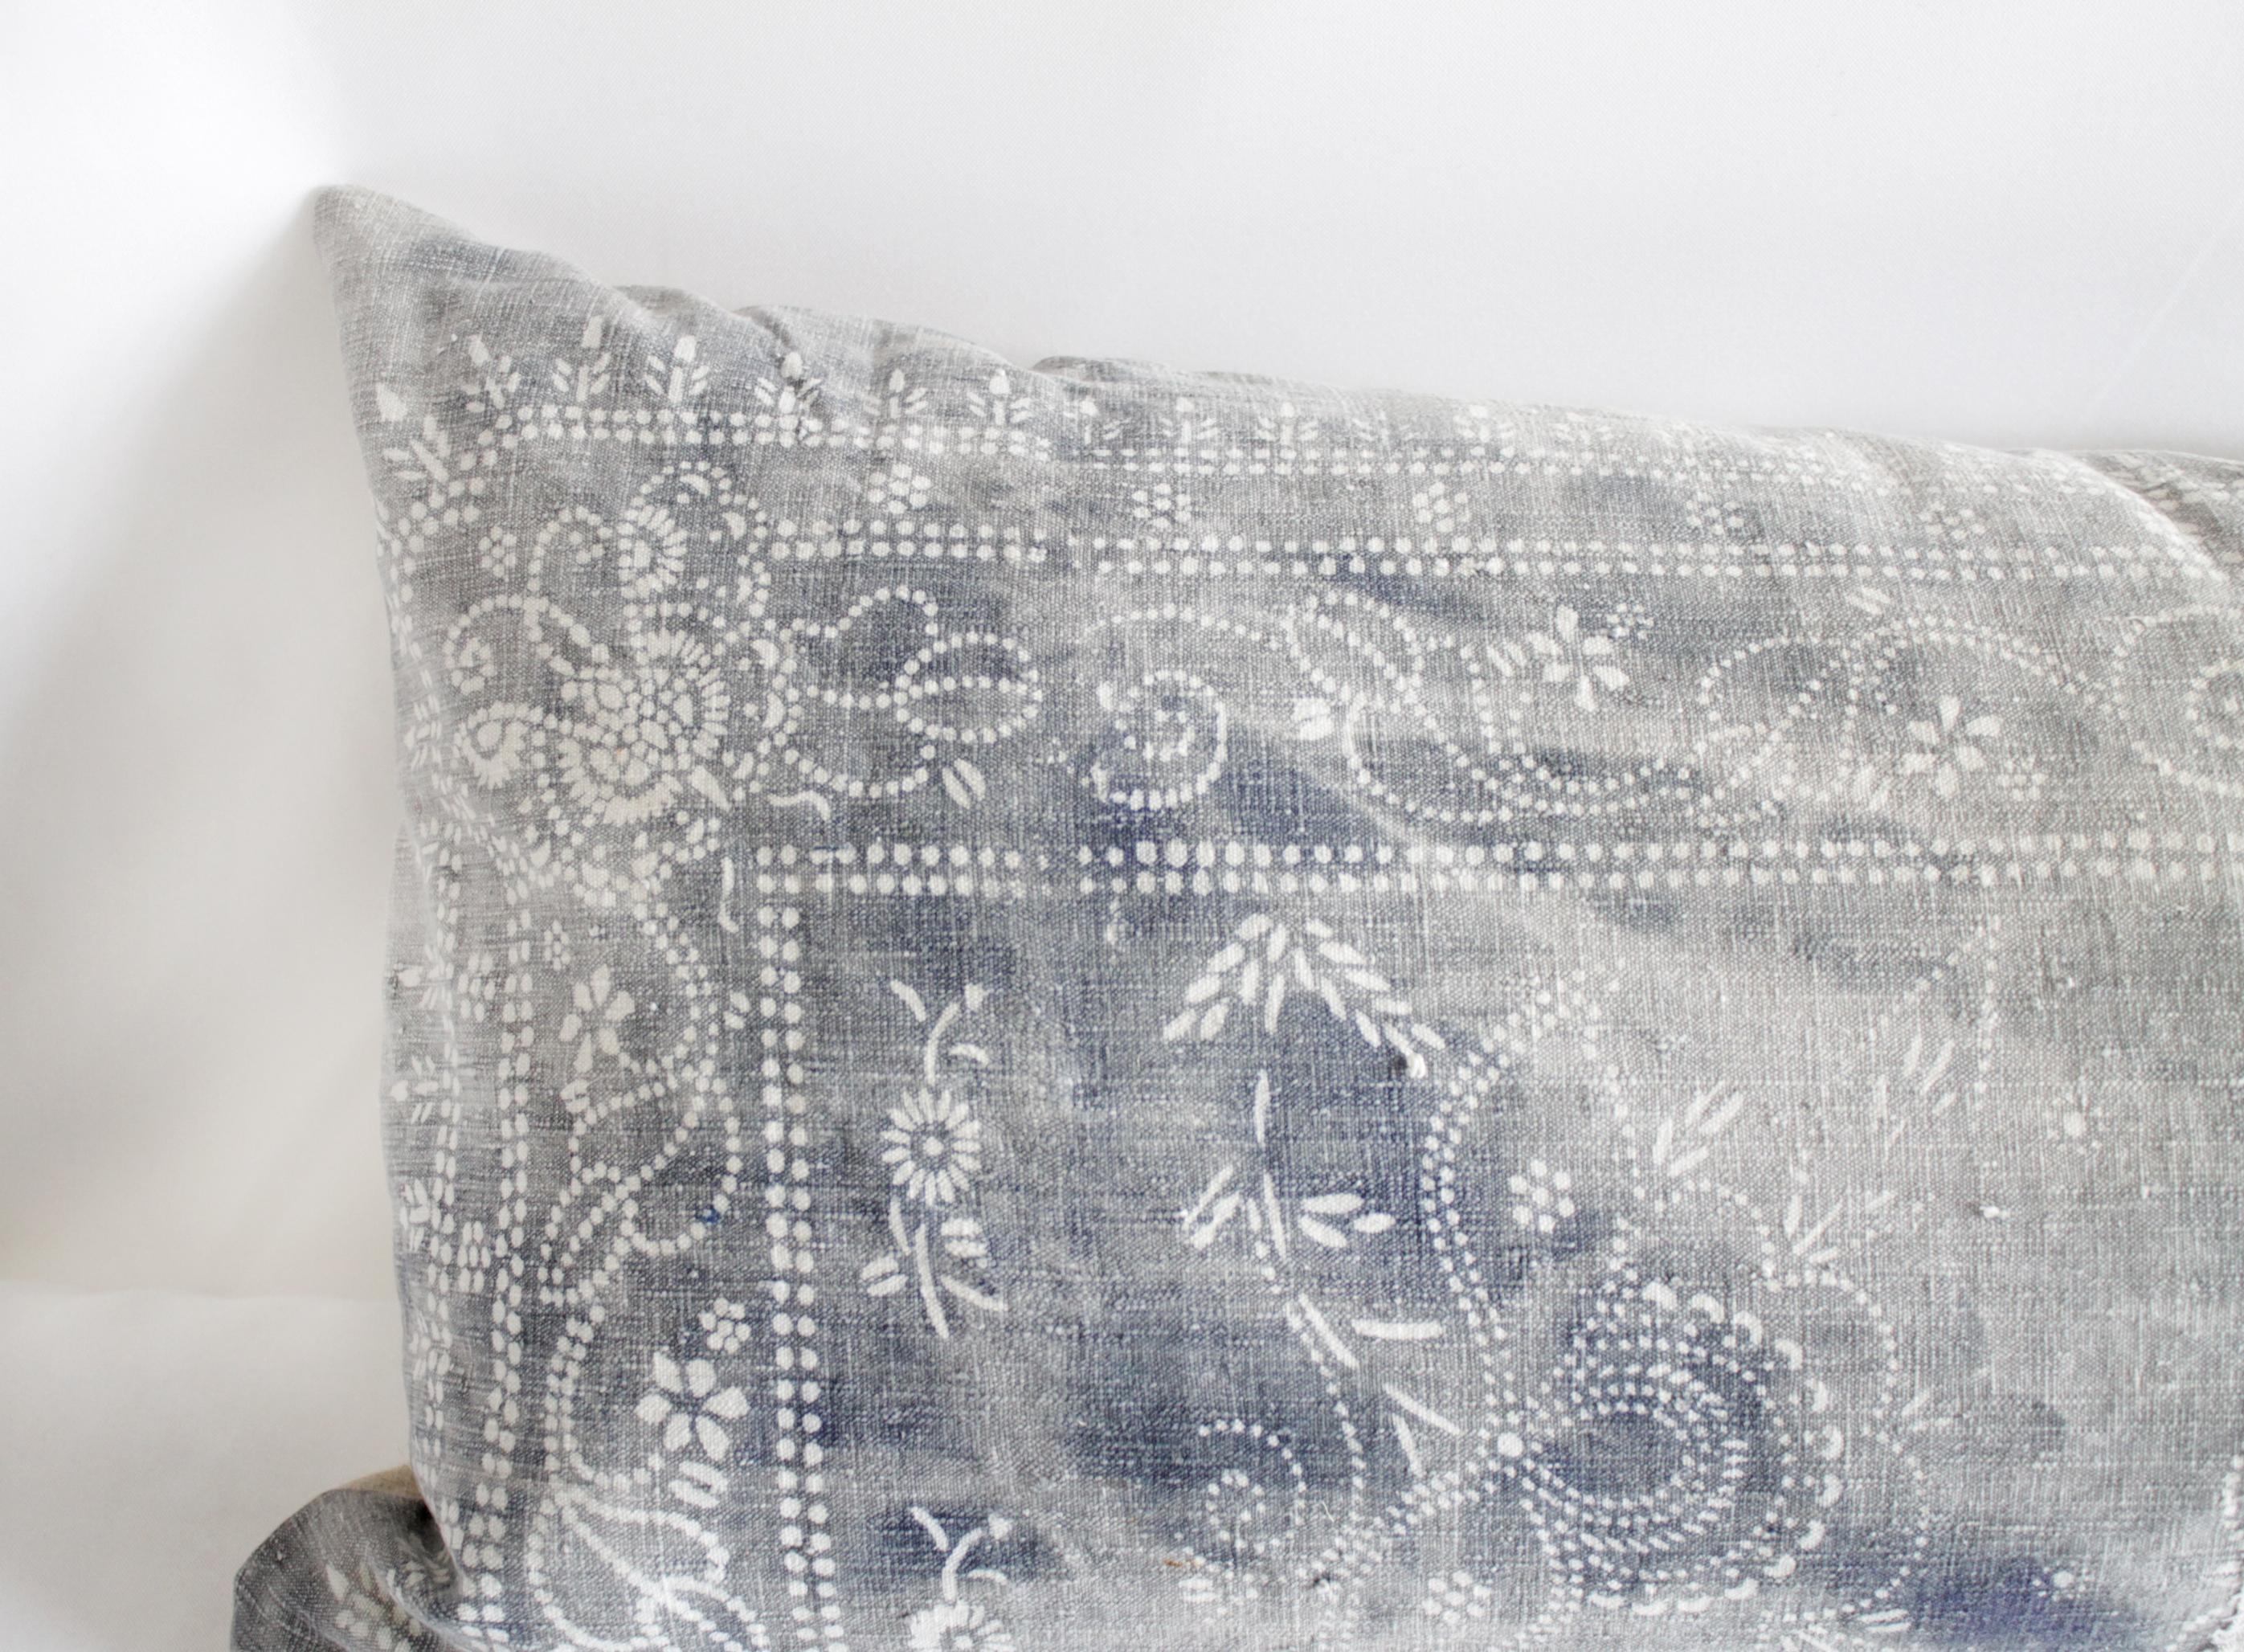 Antique faded gray and white batik Lumbar patchwork pillow
Measures: 15